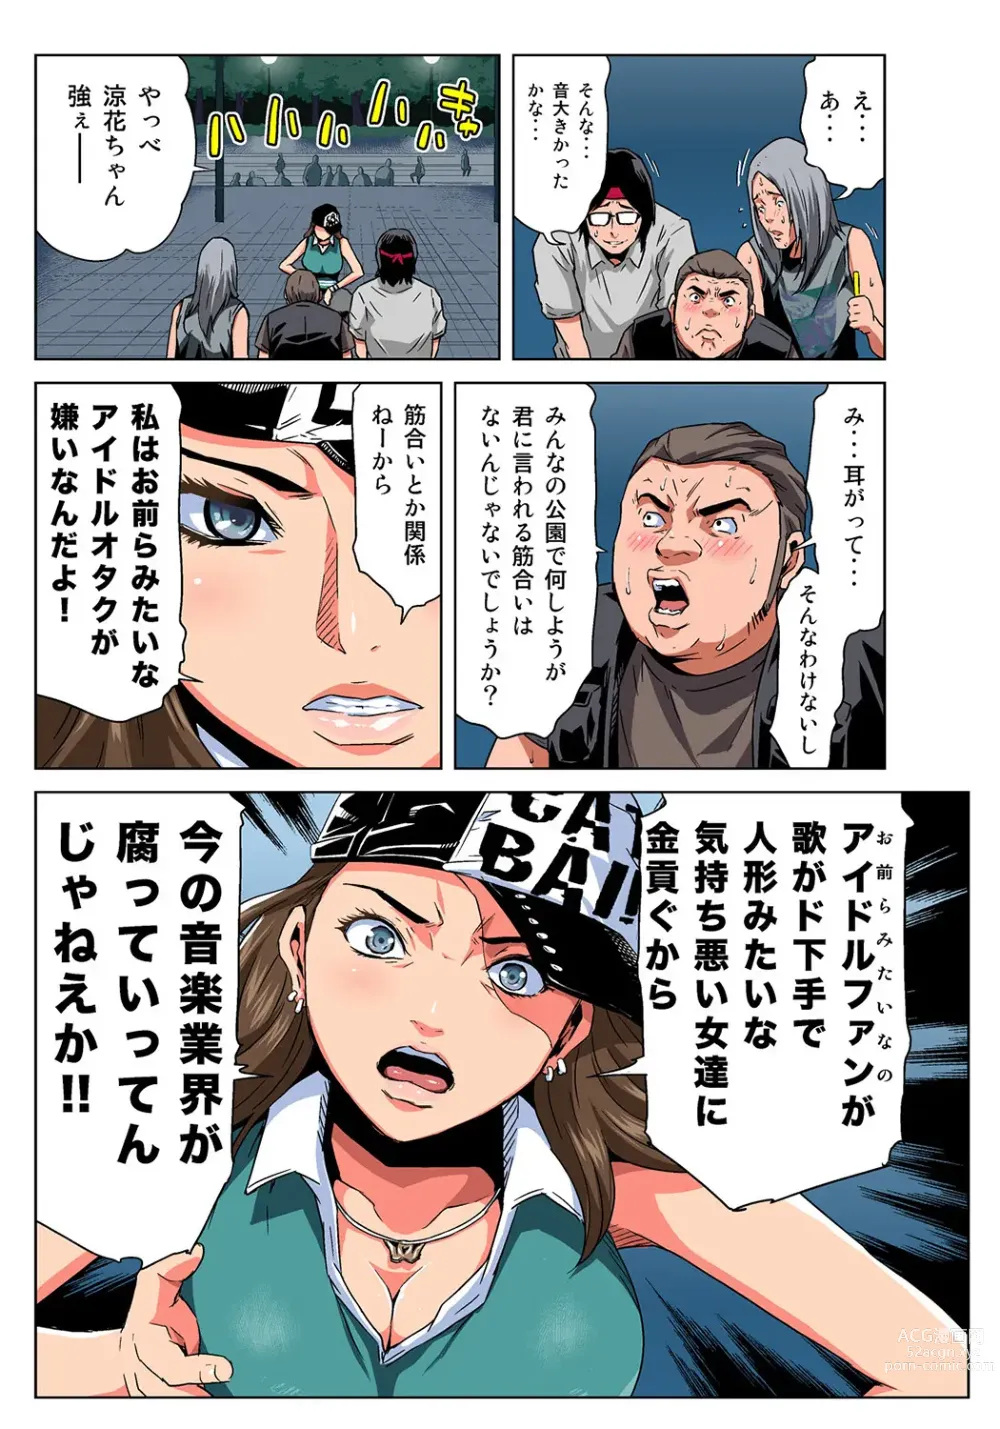 Page 8 of manga HiME-Mania Vol. 35